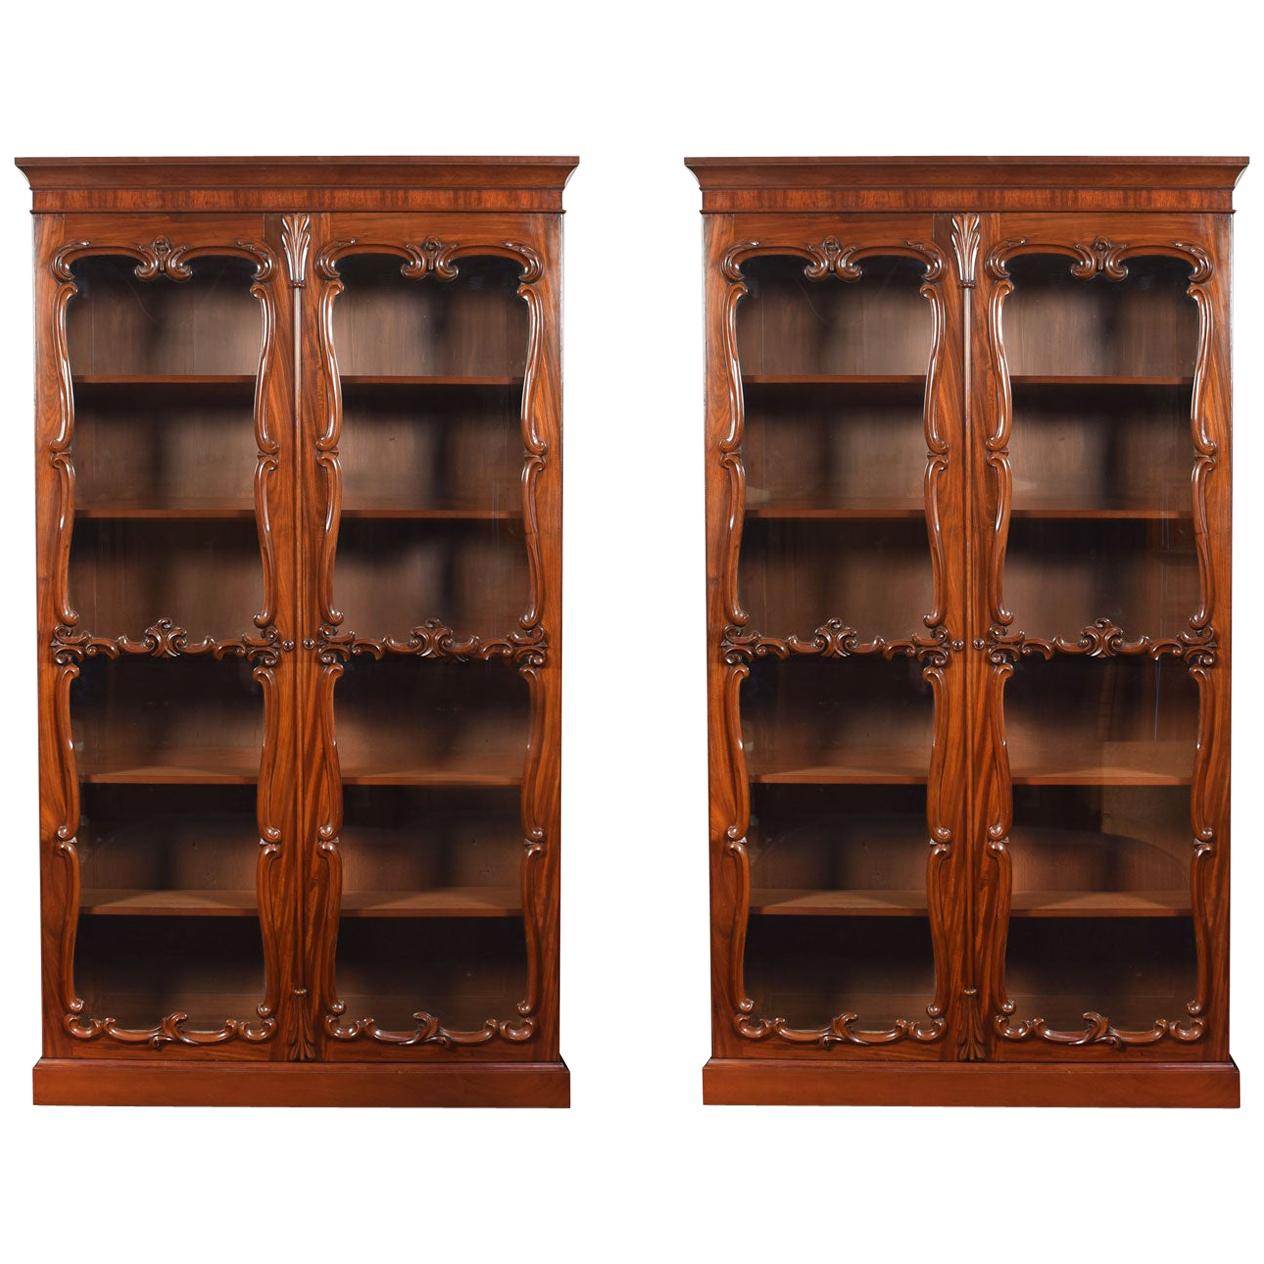 Pair of Rococo Revival Mahogany Bookcases